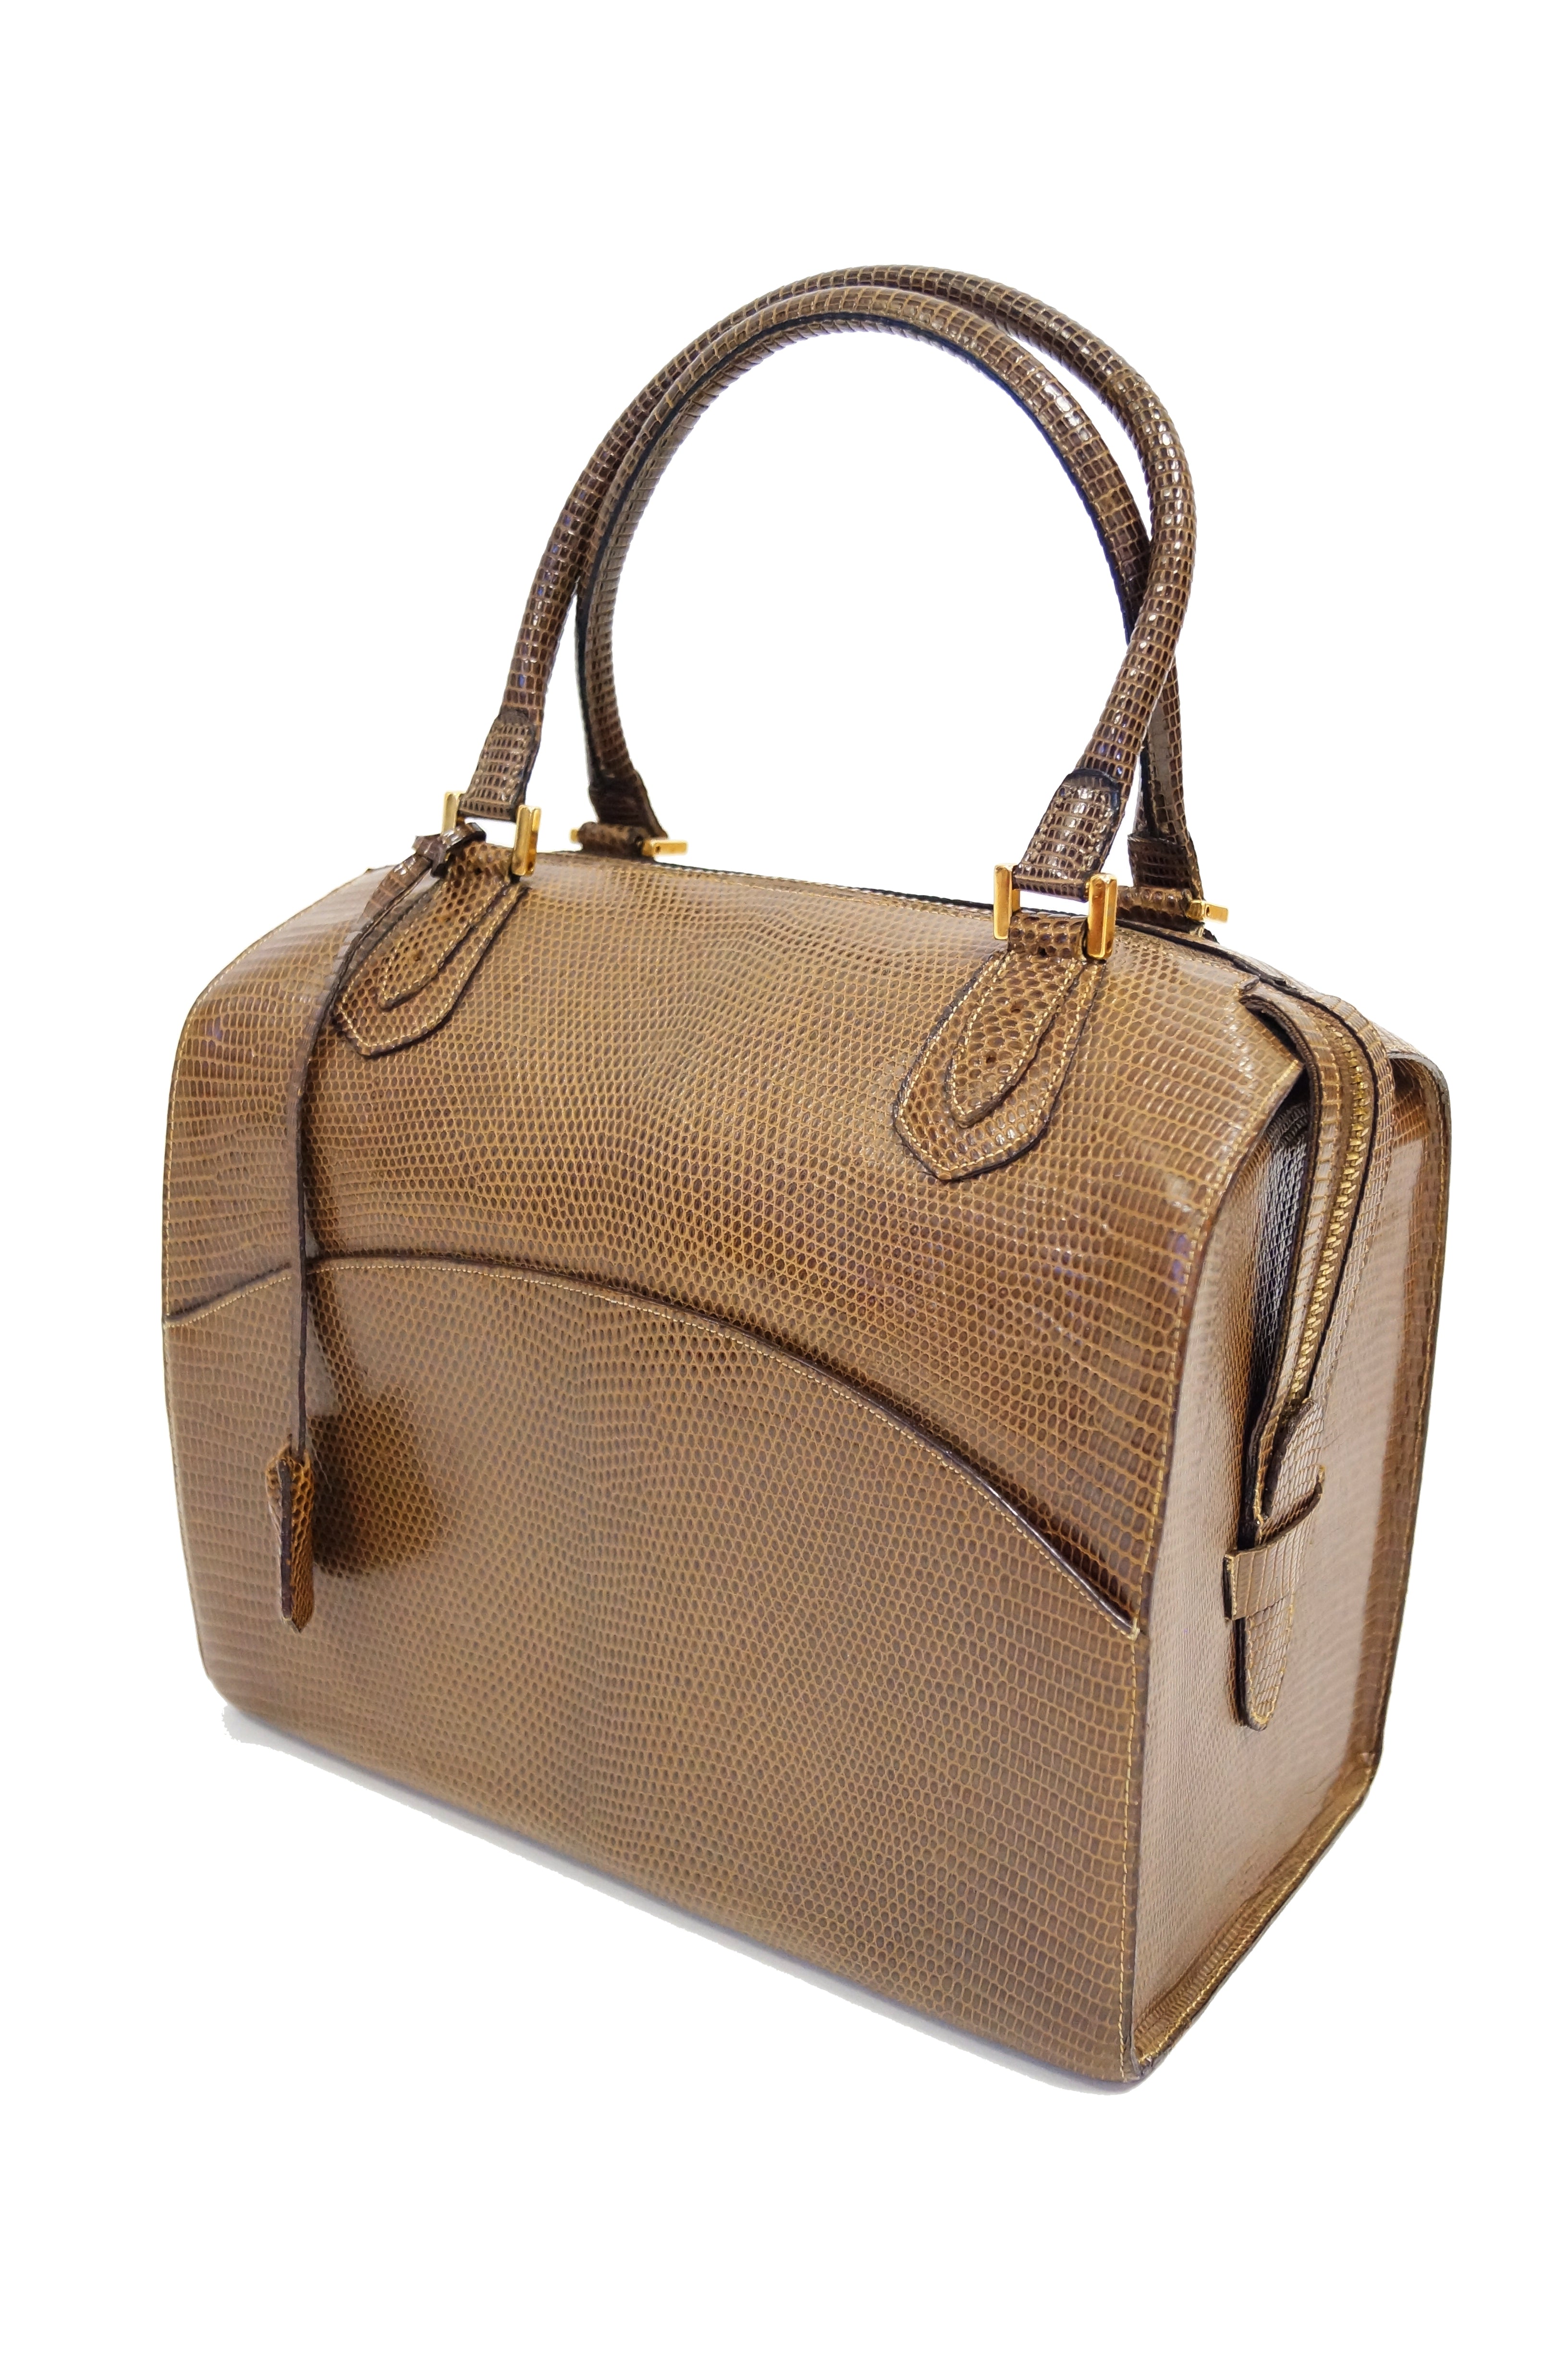 Louis Vuitton Vintage 1960s Speedy Bag Satchel 